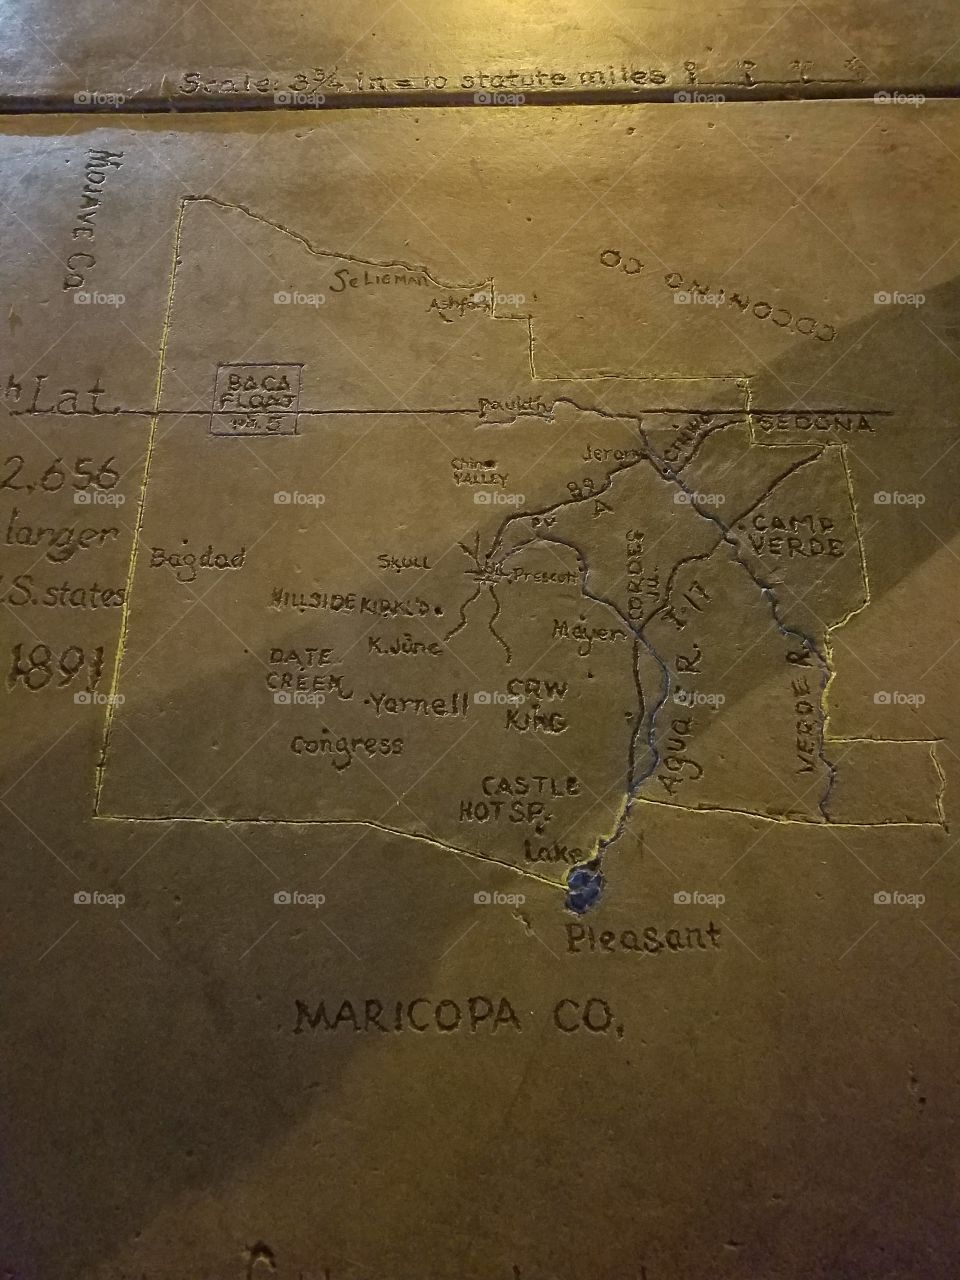 Maricopa County, Arizona. Carved in the Concrete